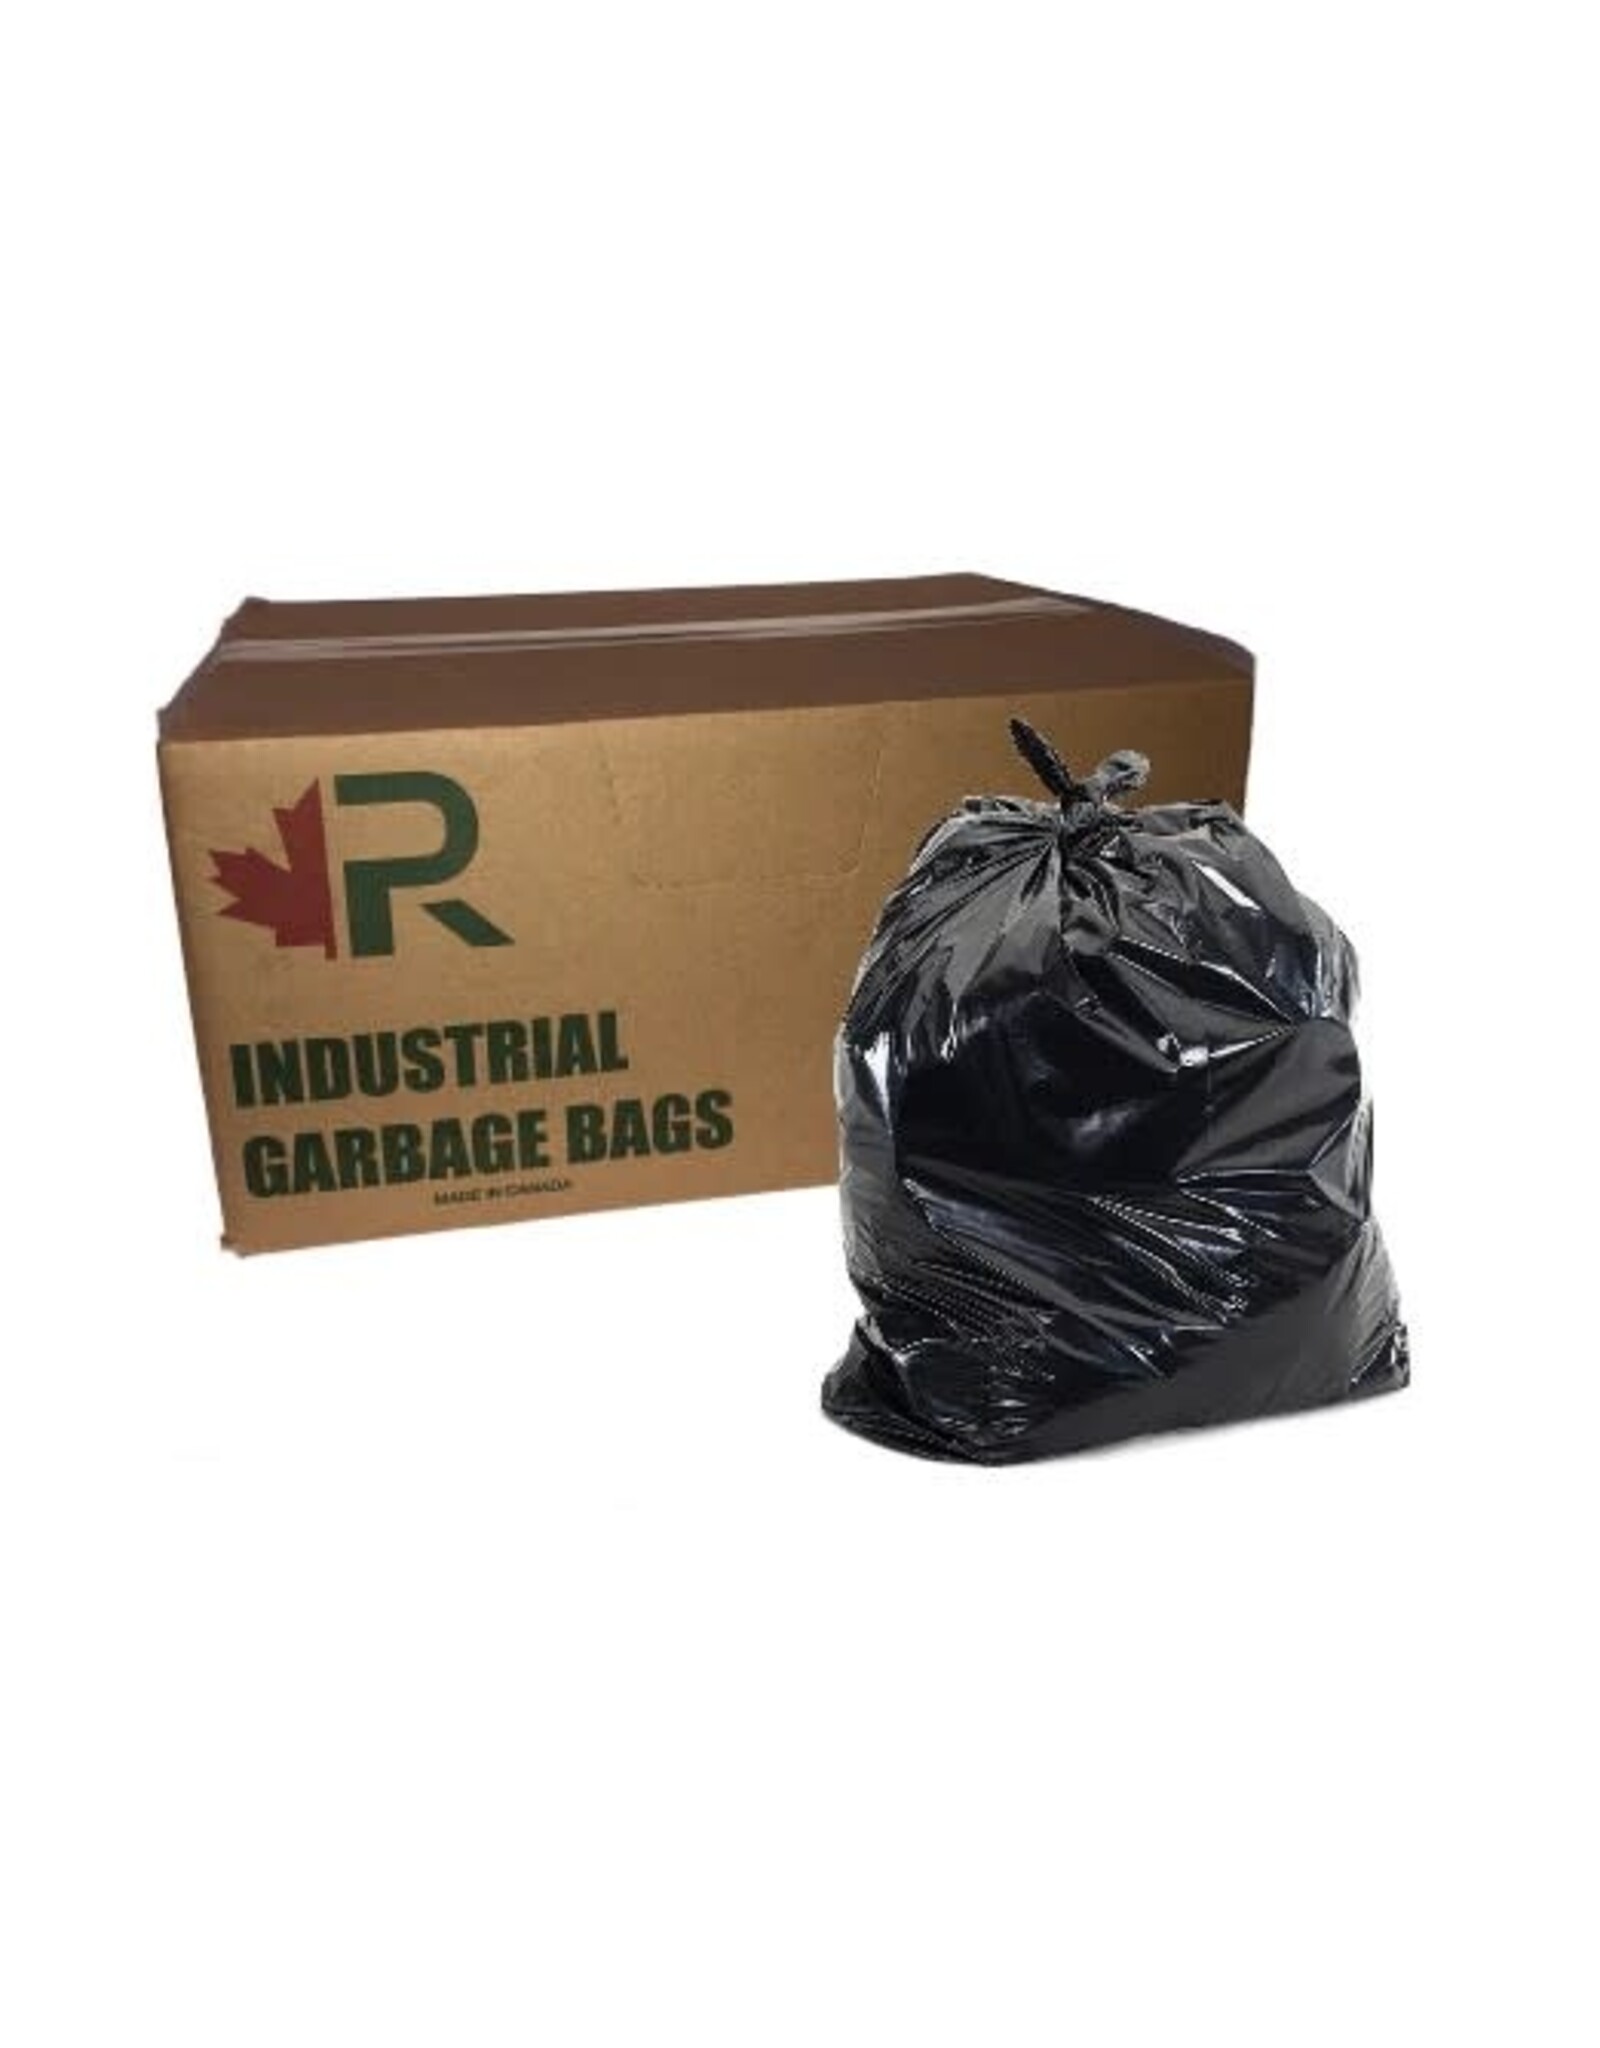 Roberts 35x50 Garbage Bags, Black/3 MIL Contractor, 75/C